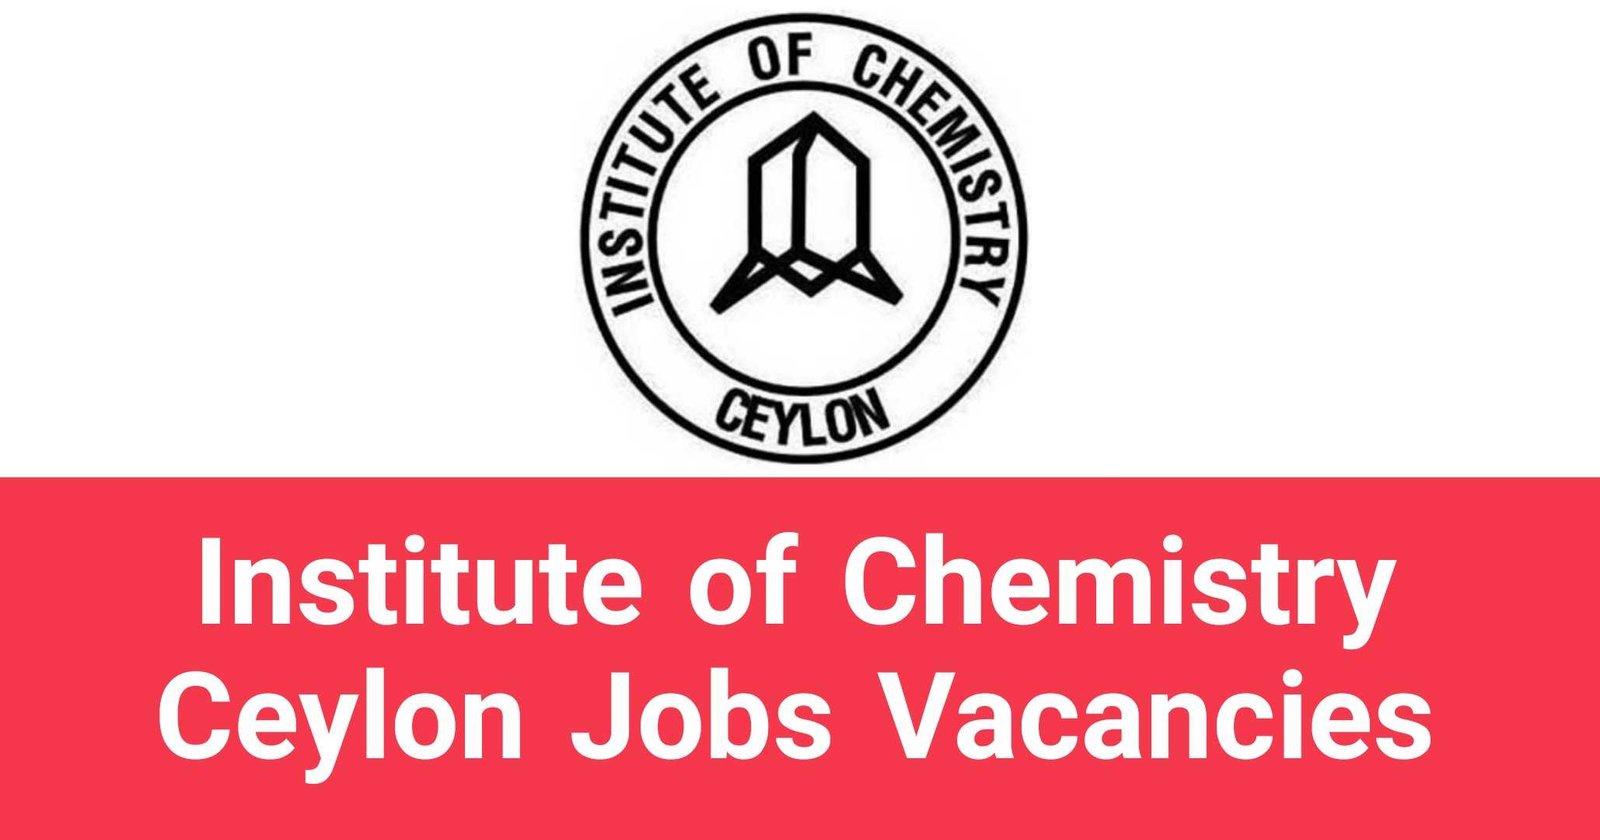 Institute of Chemistry Ceylon Jobs Vacancies Careers Recruitments